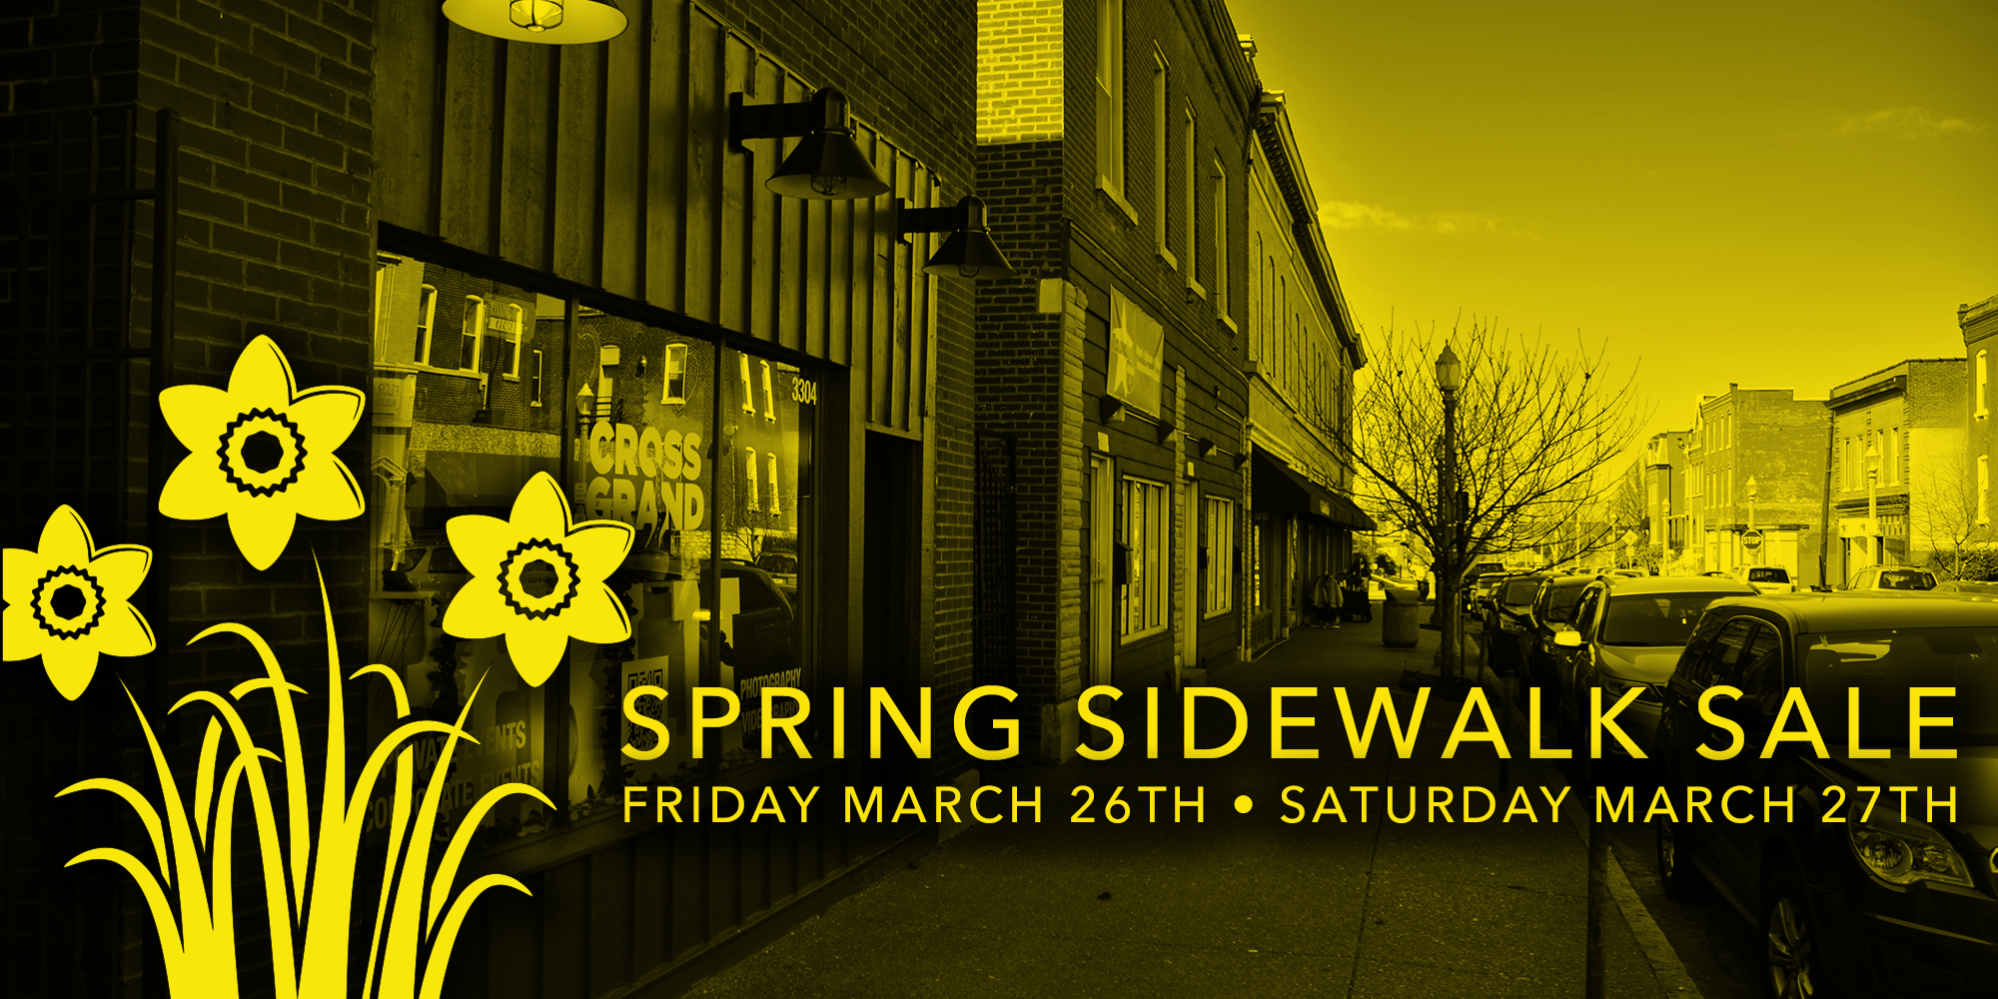 Proljetna prodaja pločnika u centru grada Dutchtown, petak 26. marta i subota 27. marta.